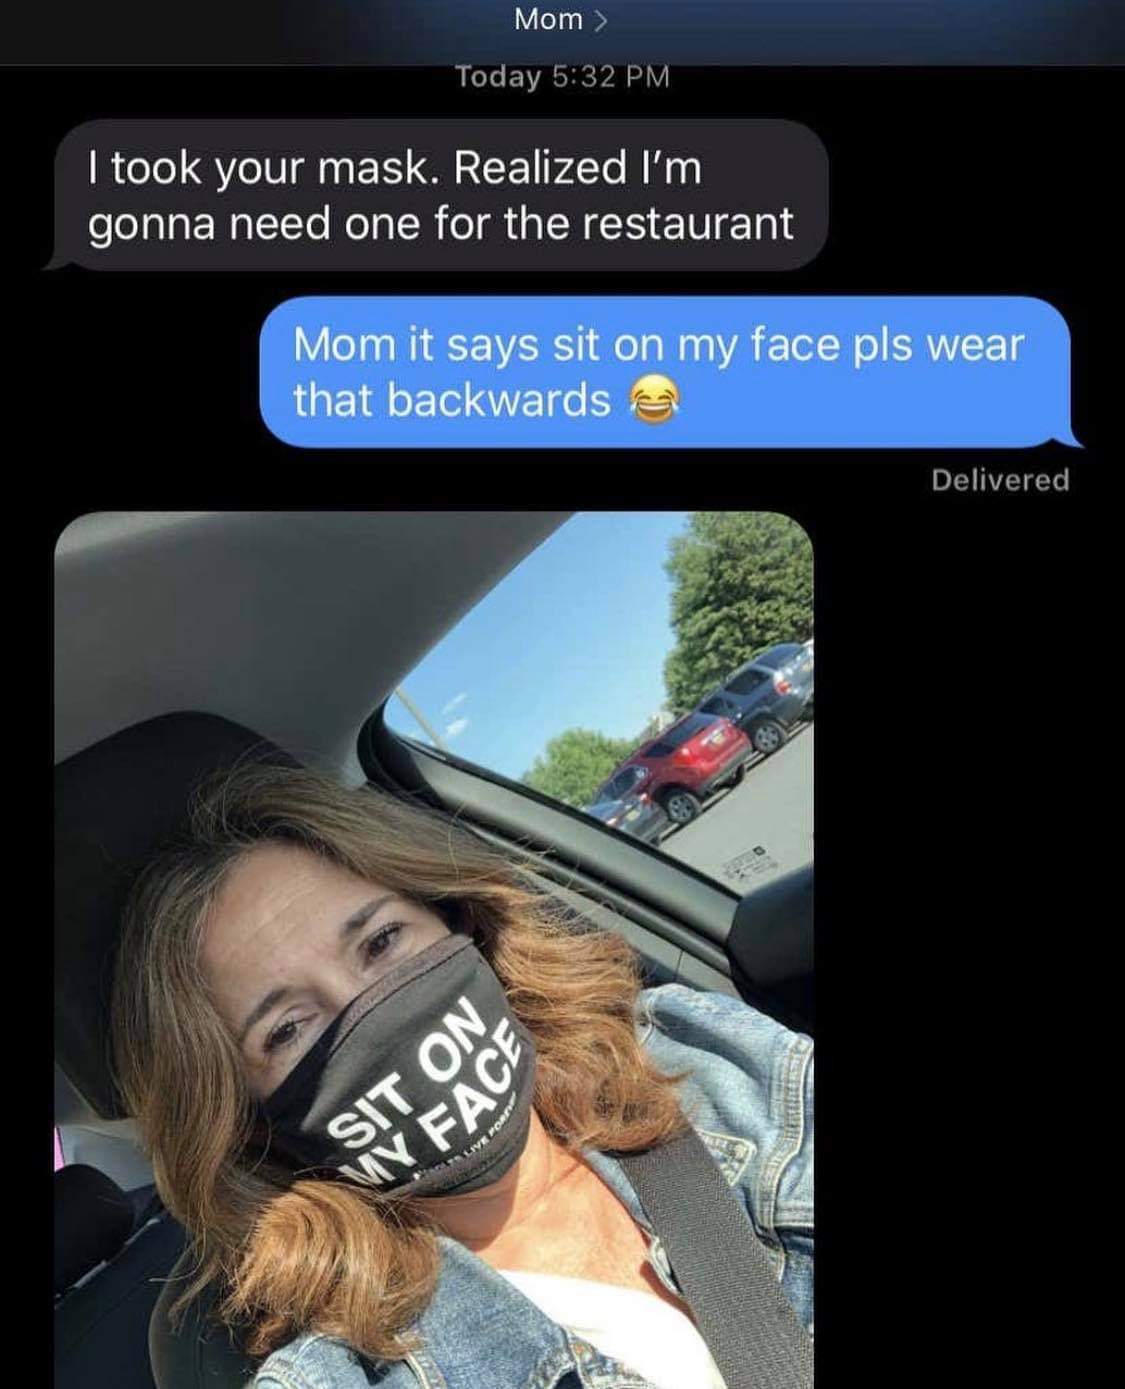 So we're sharing masks now.... - meme